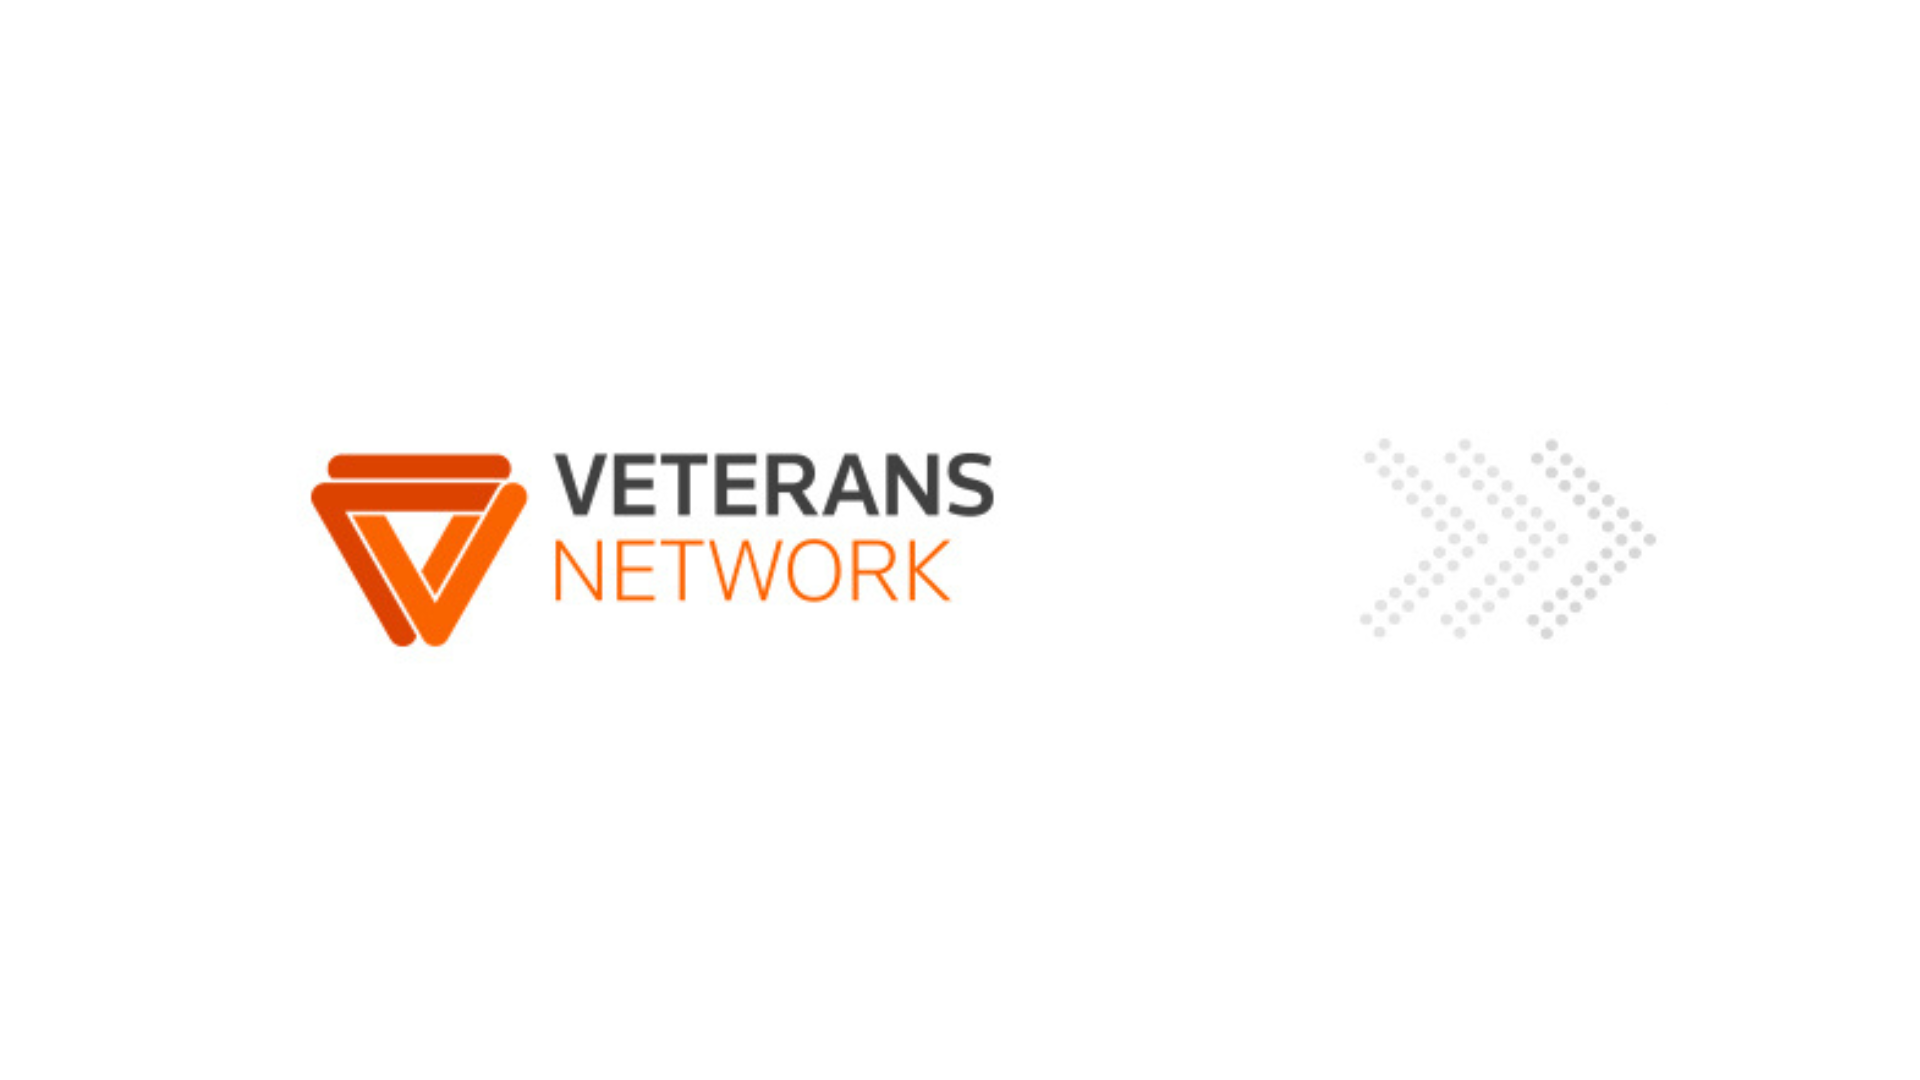 The Thomson Reuters Veterans Network logo